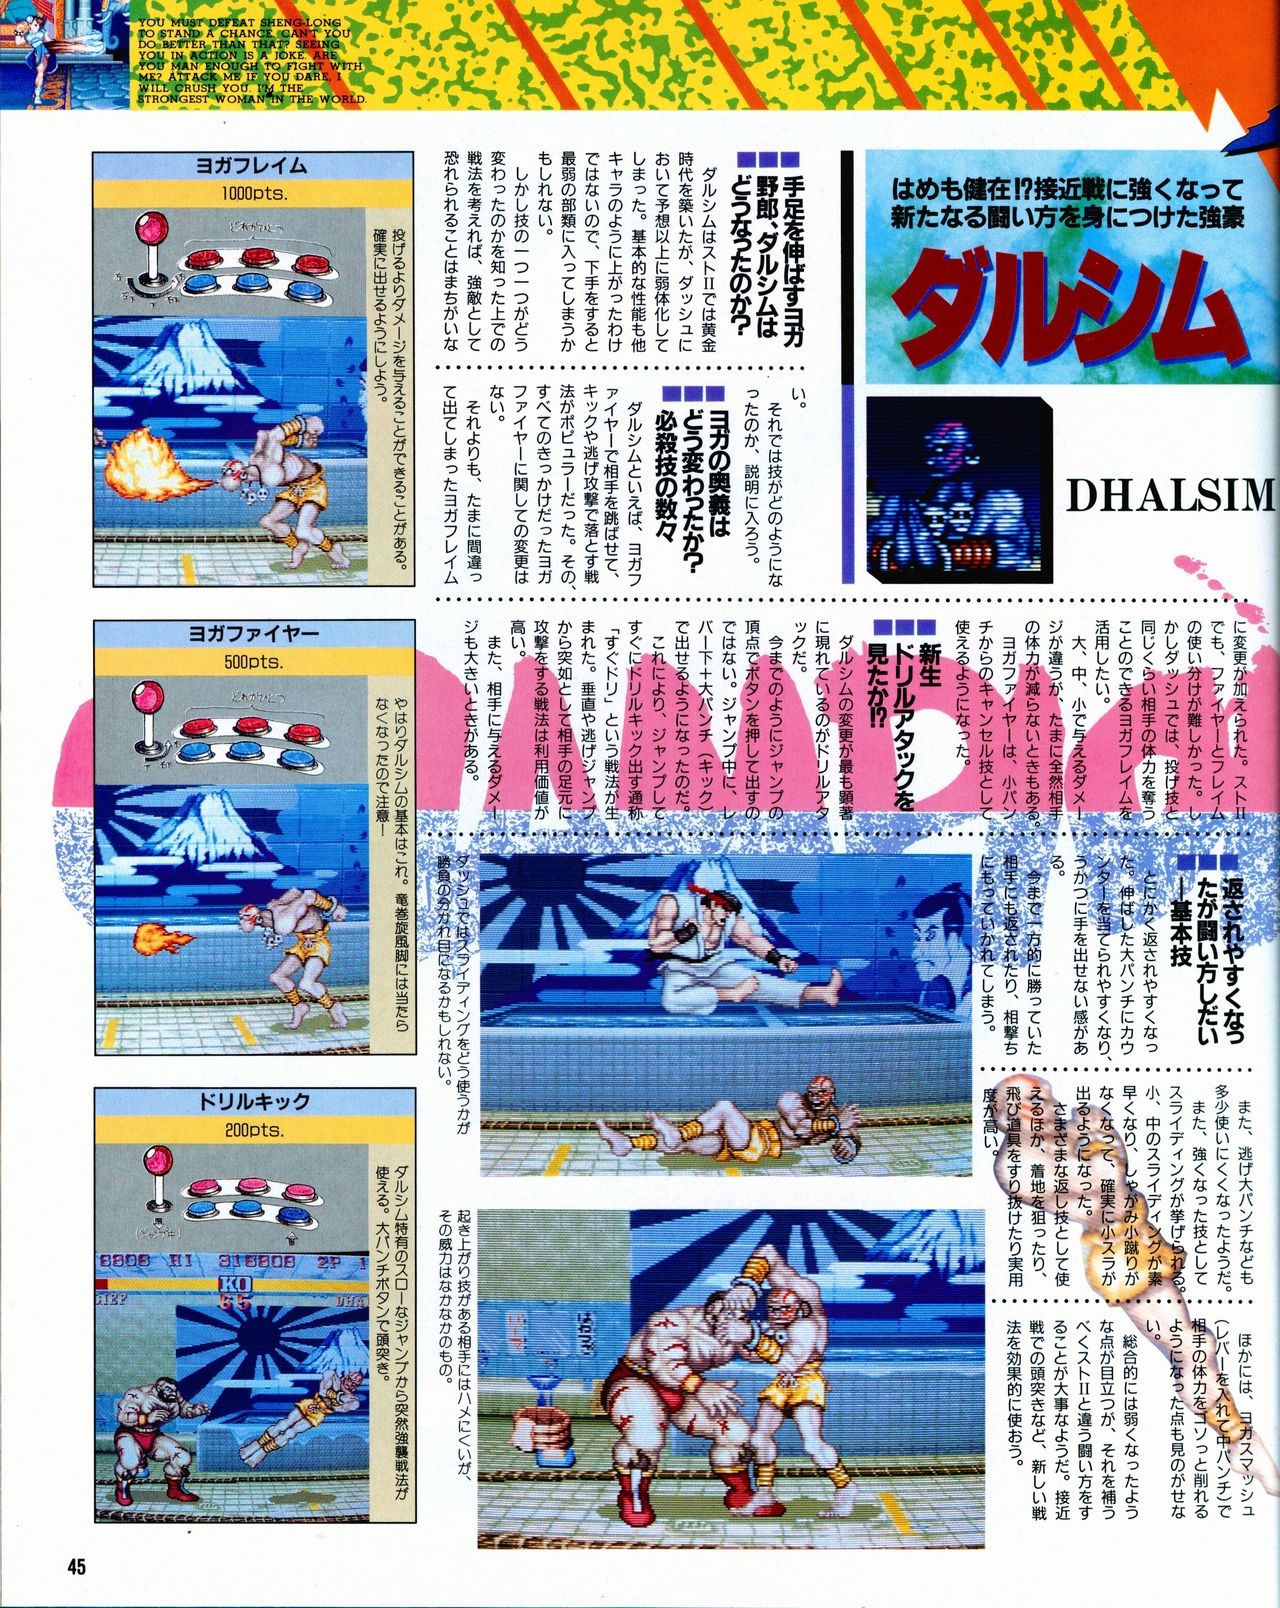 Street Fighter II Dash - Gamest special issue 77 46